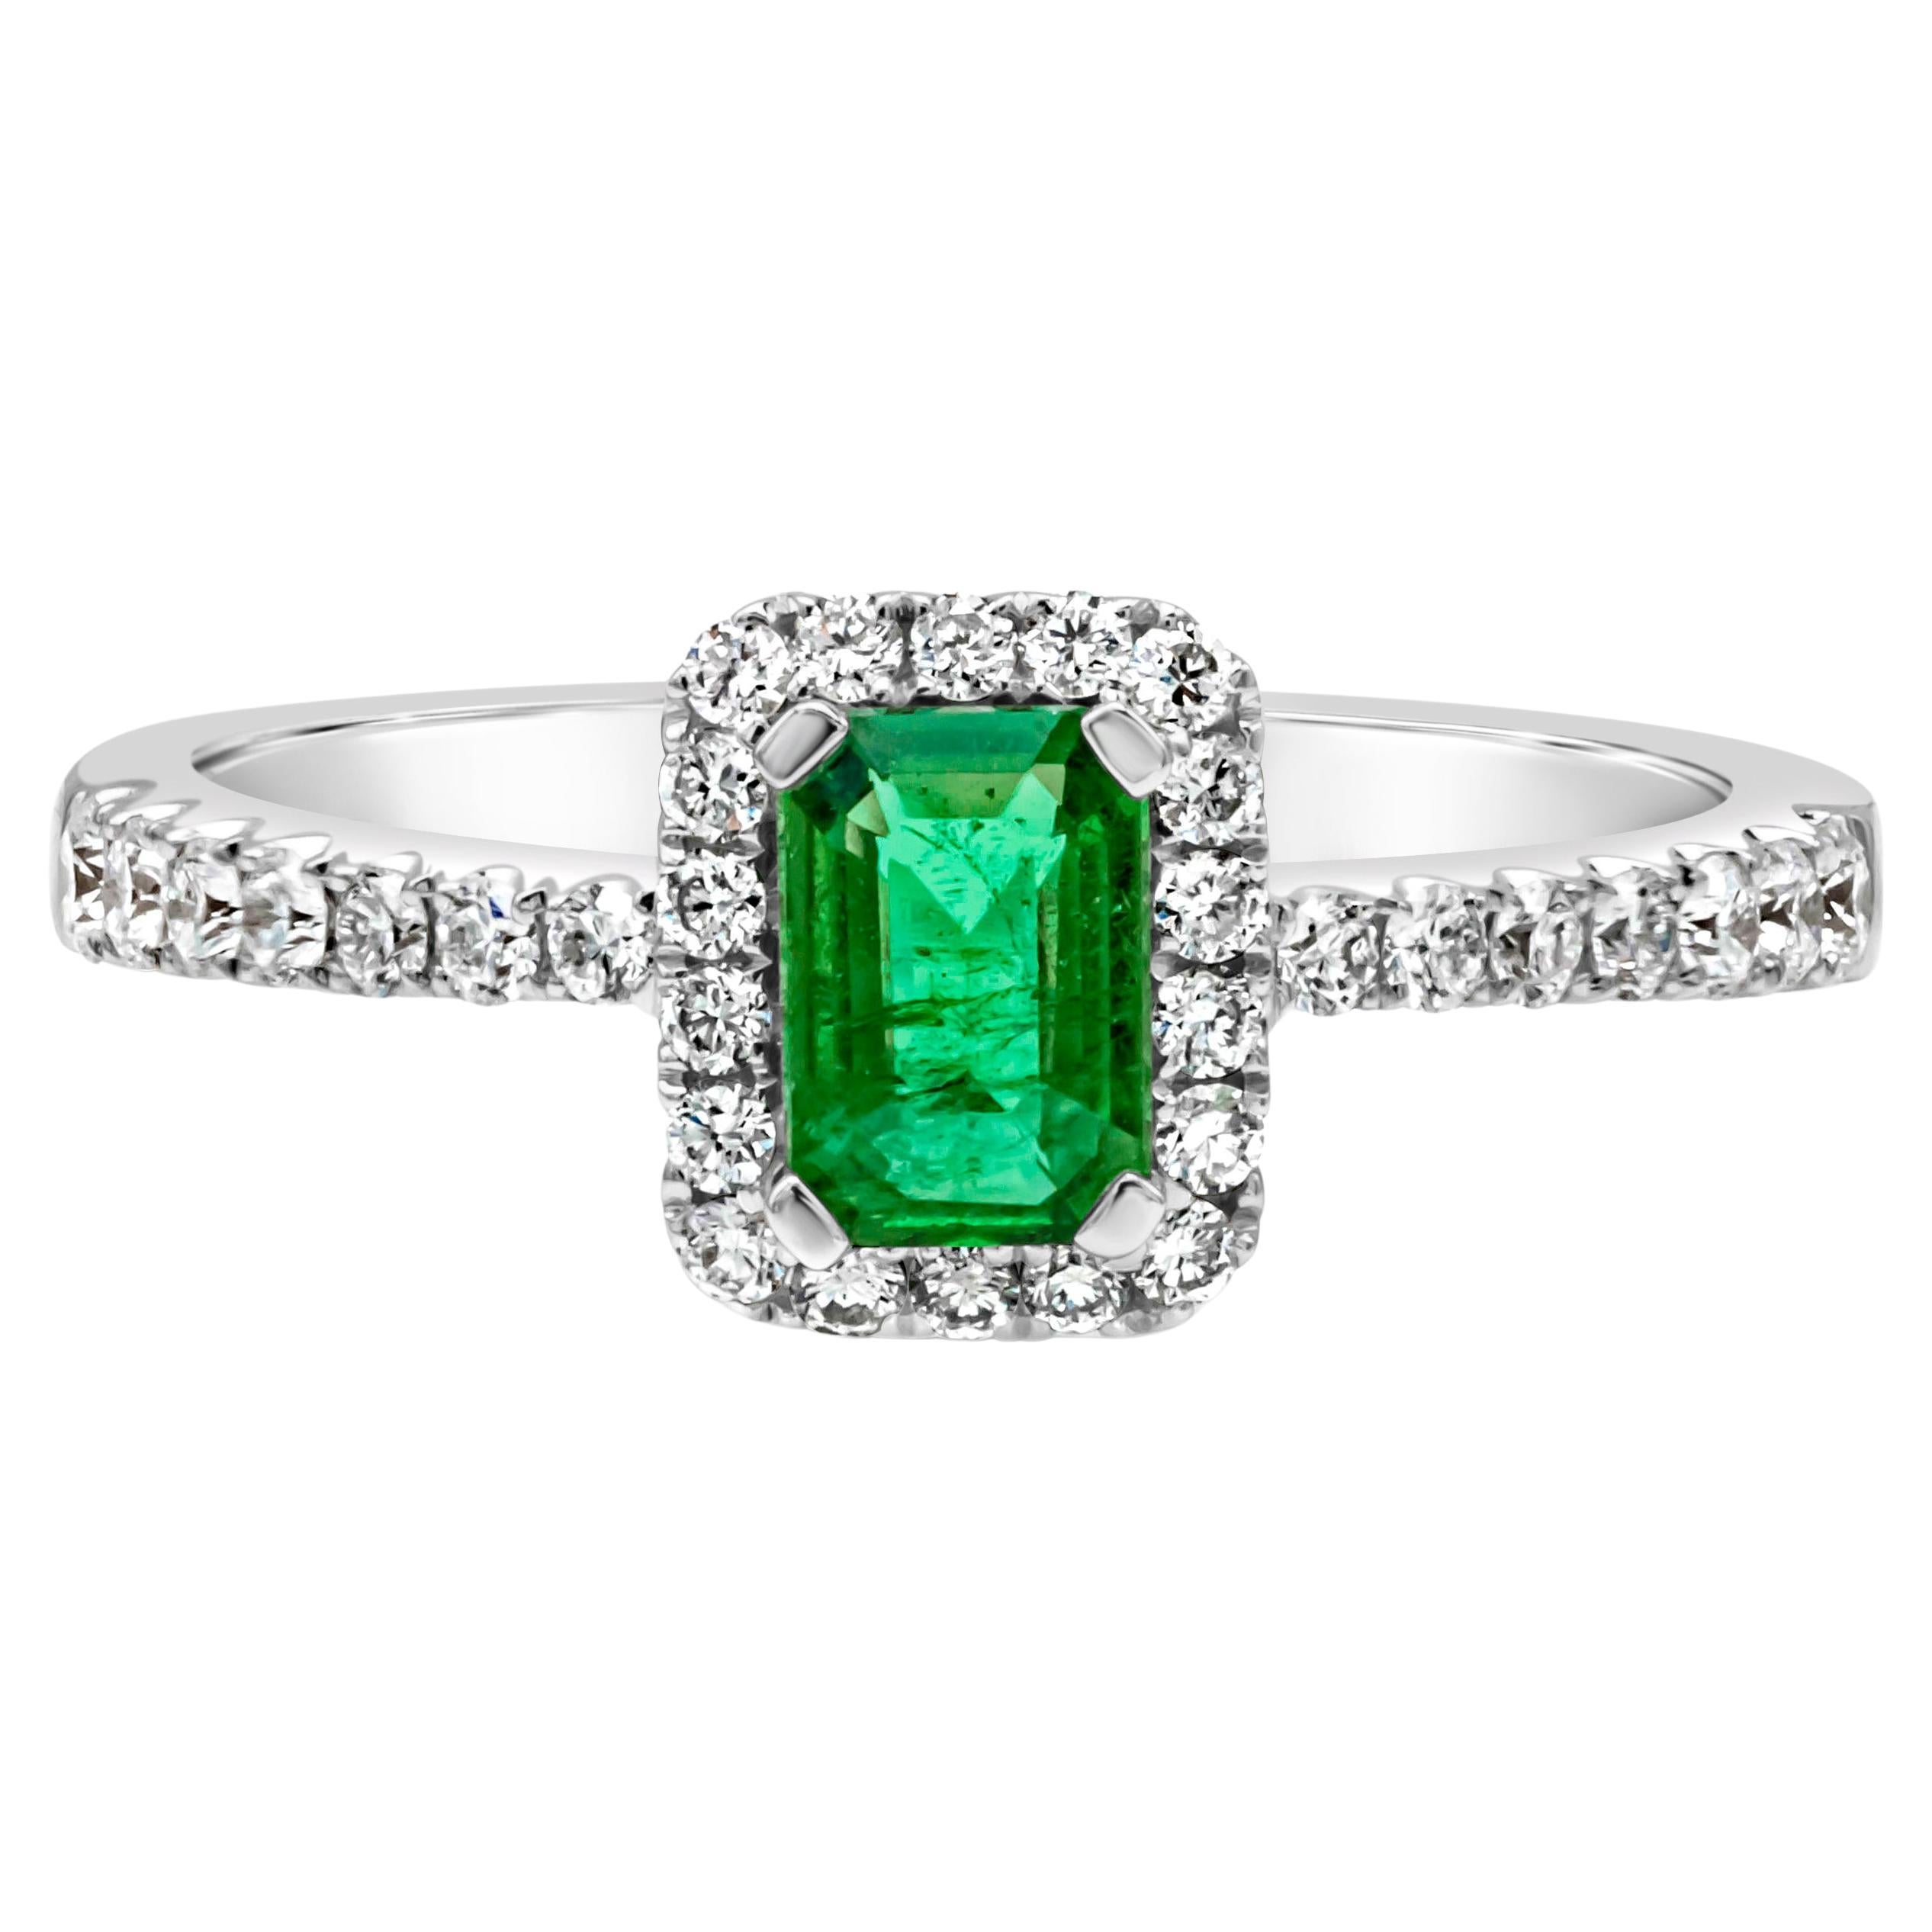 0.49 Carats Total Emerald Cut Green Emerald & Diamond Halo Engagement Ring